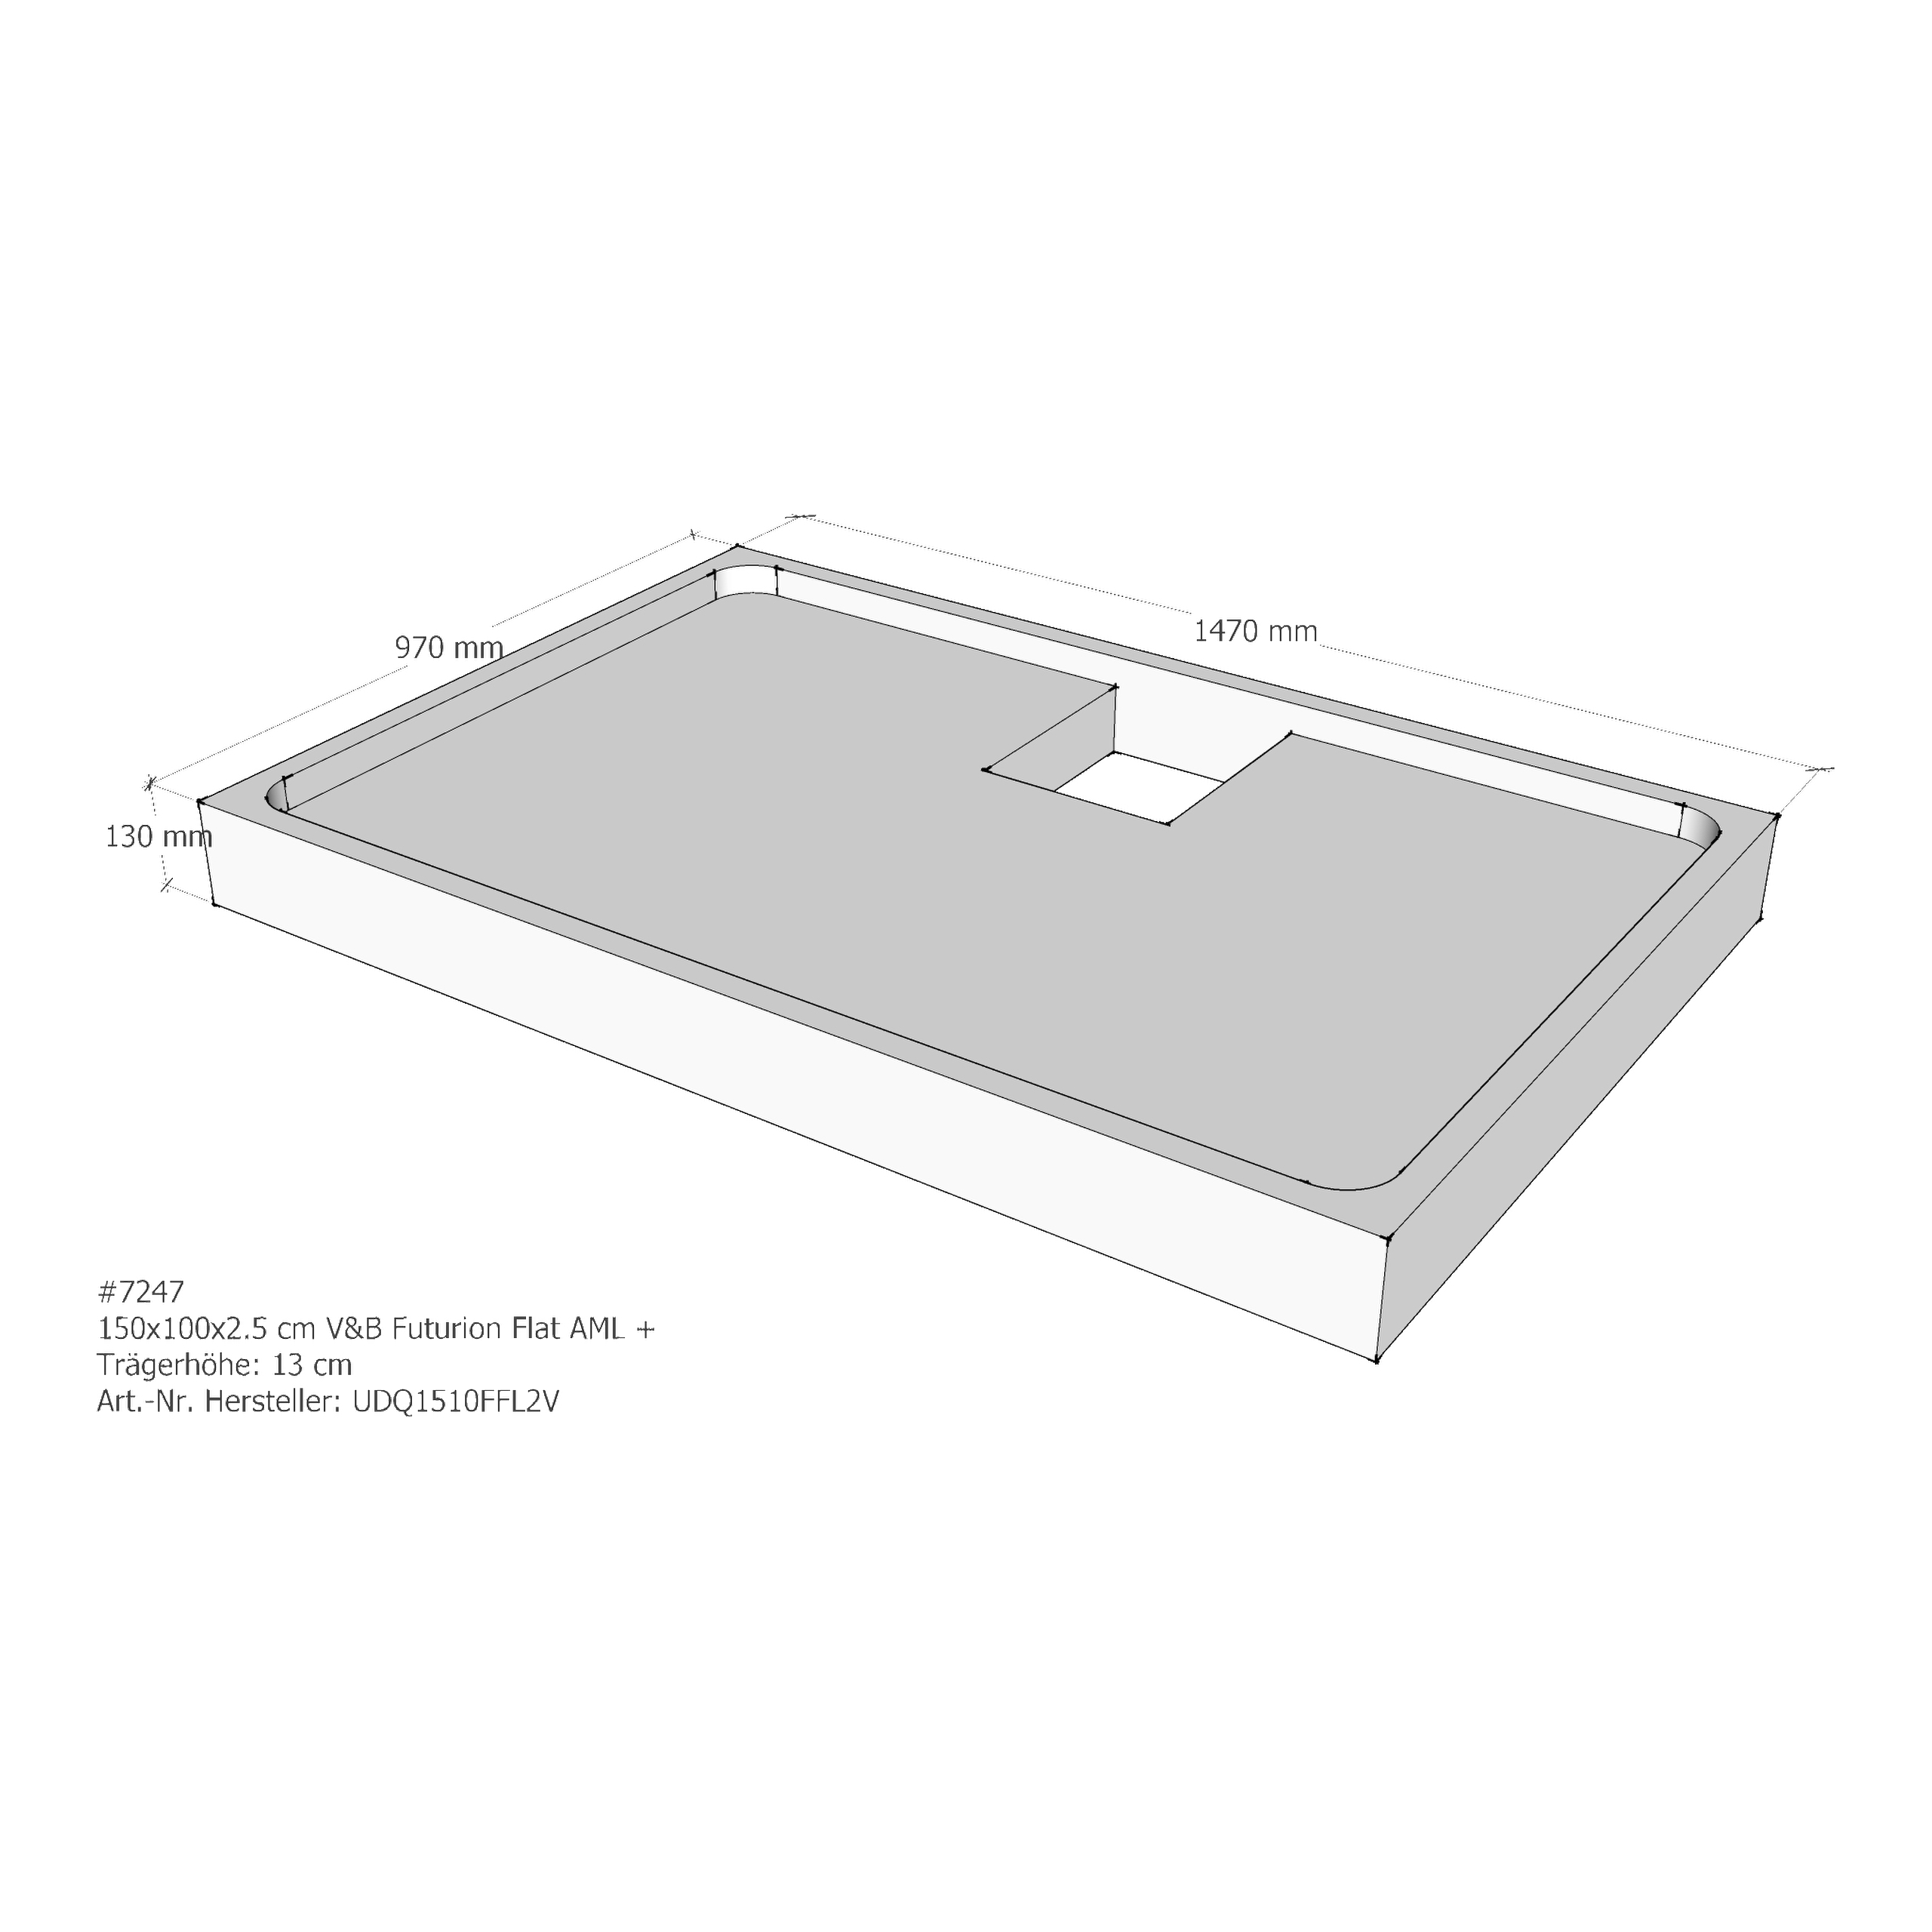 Duschwannenträger für Villeroy & Boch Futurion Flat 150 × 100 × 2,5 cm